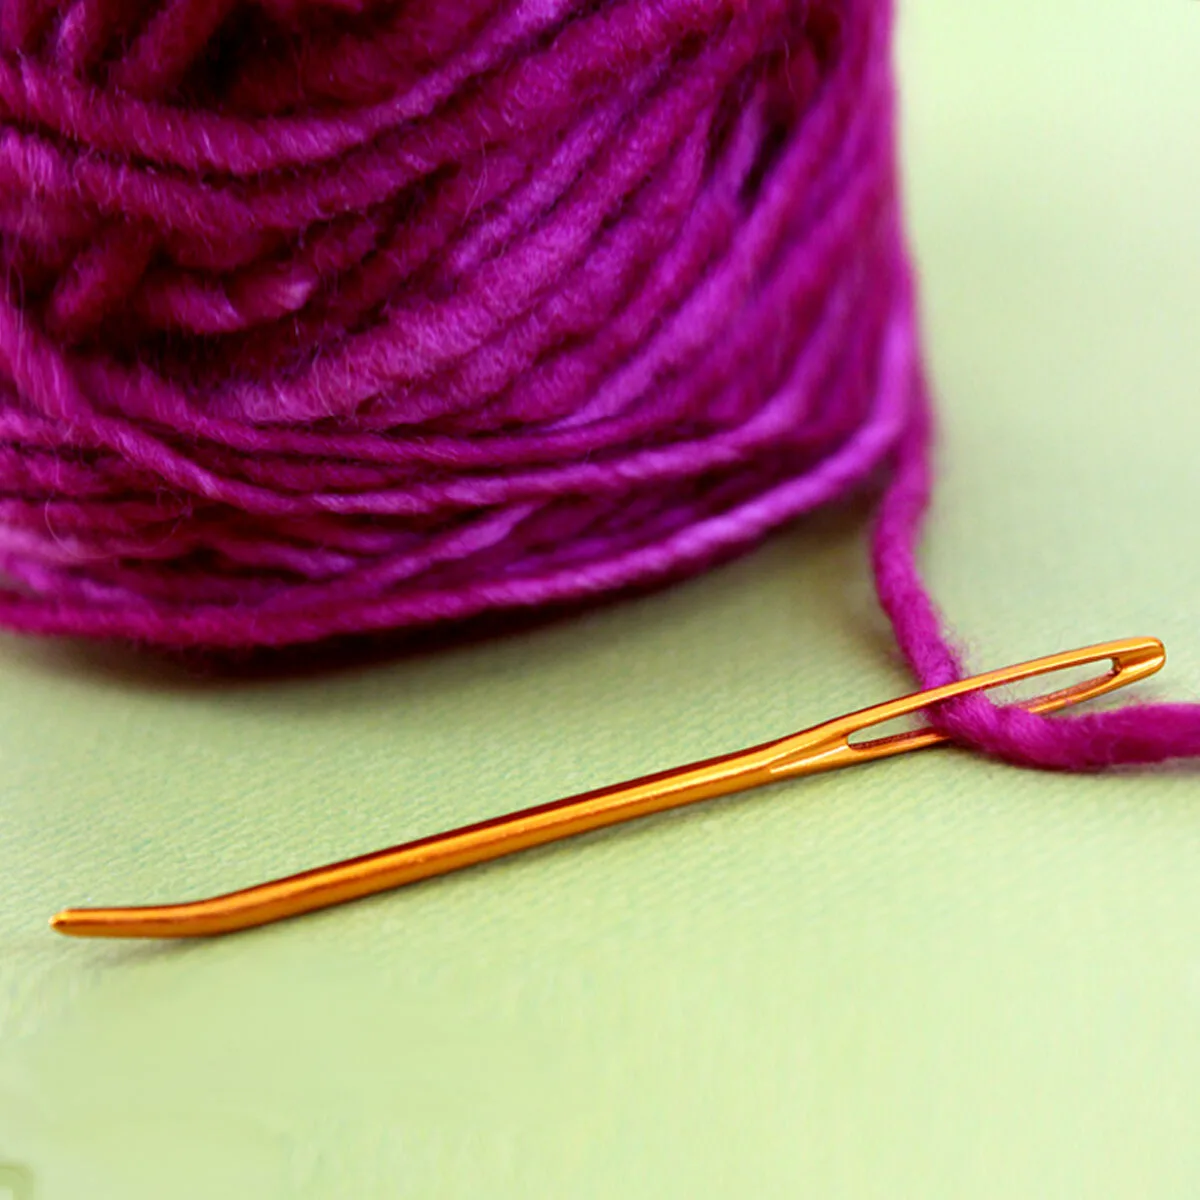  Yarn Darning Tapestry Large Sewing Big Eye Weaving Crochet Wool  Blunt Needles Needle : Arts, Crafts & Sewing